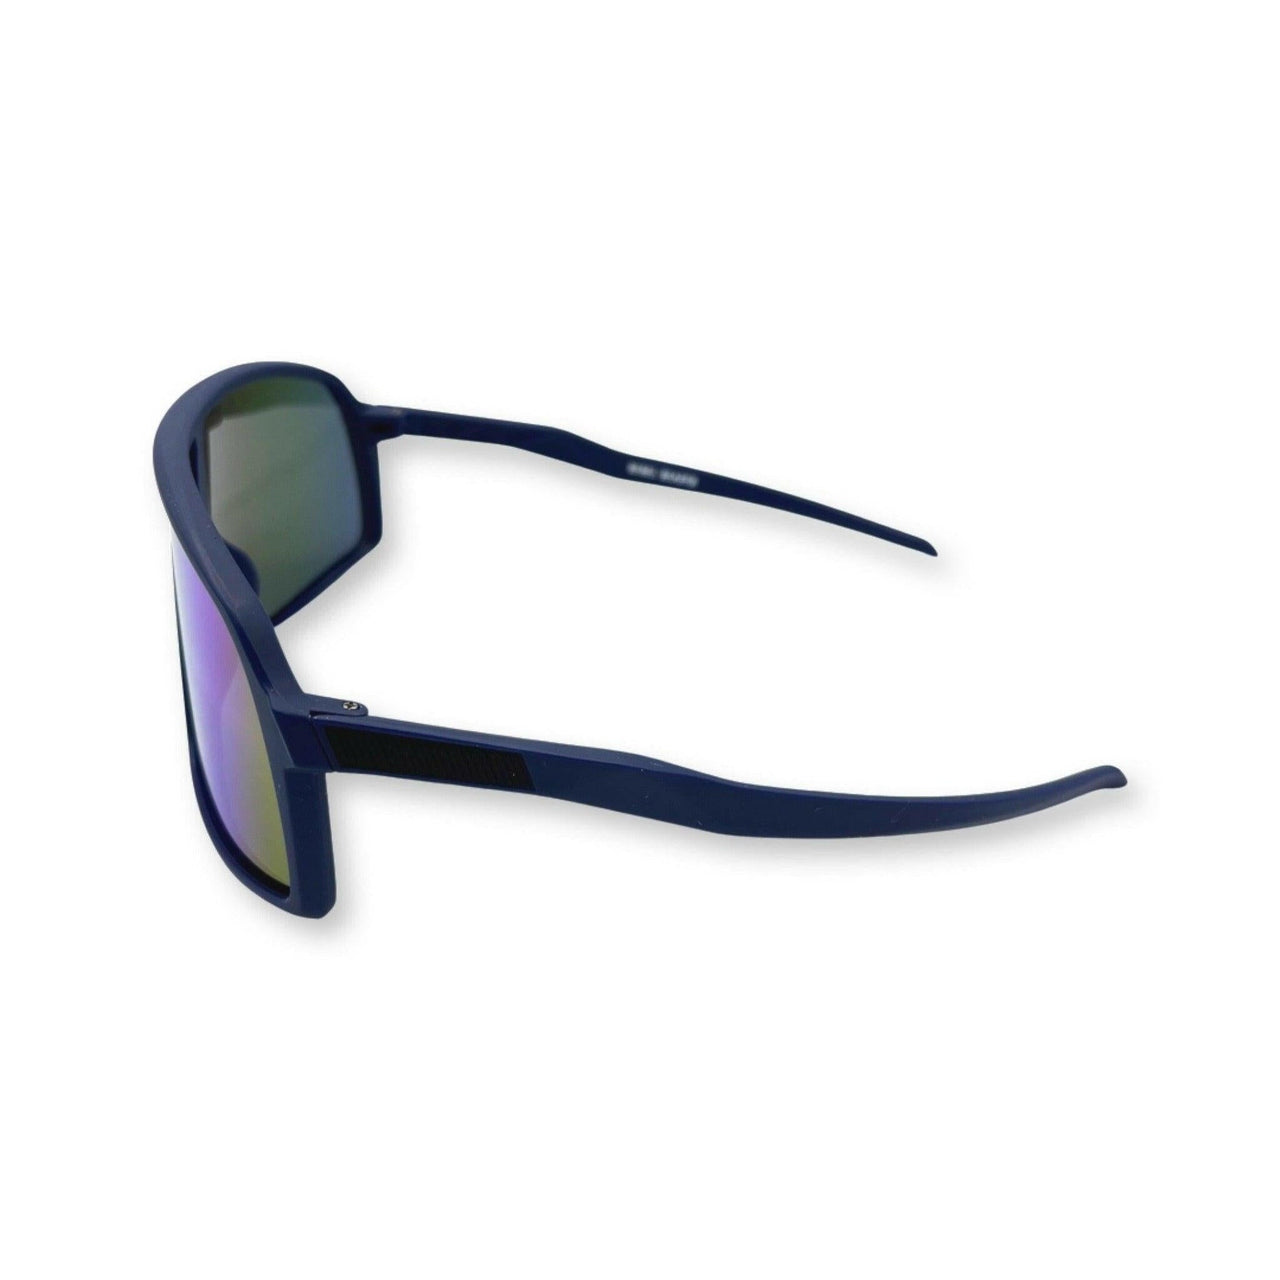 Yeti Navy Mirror Polarized Lens Sunglasses - Rebel Reaper Clothing Company Sunglasses